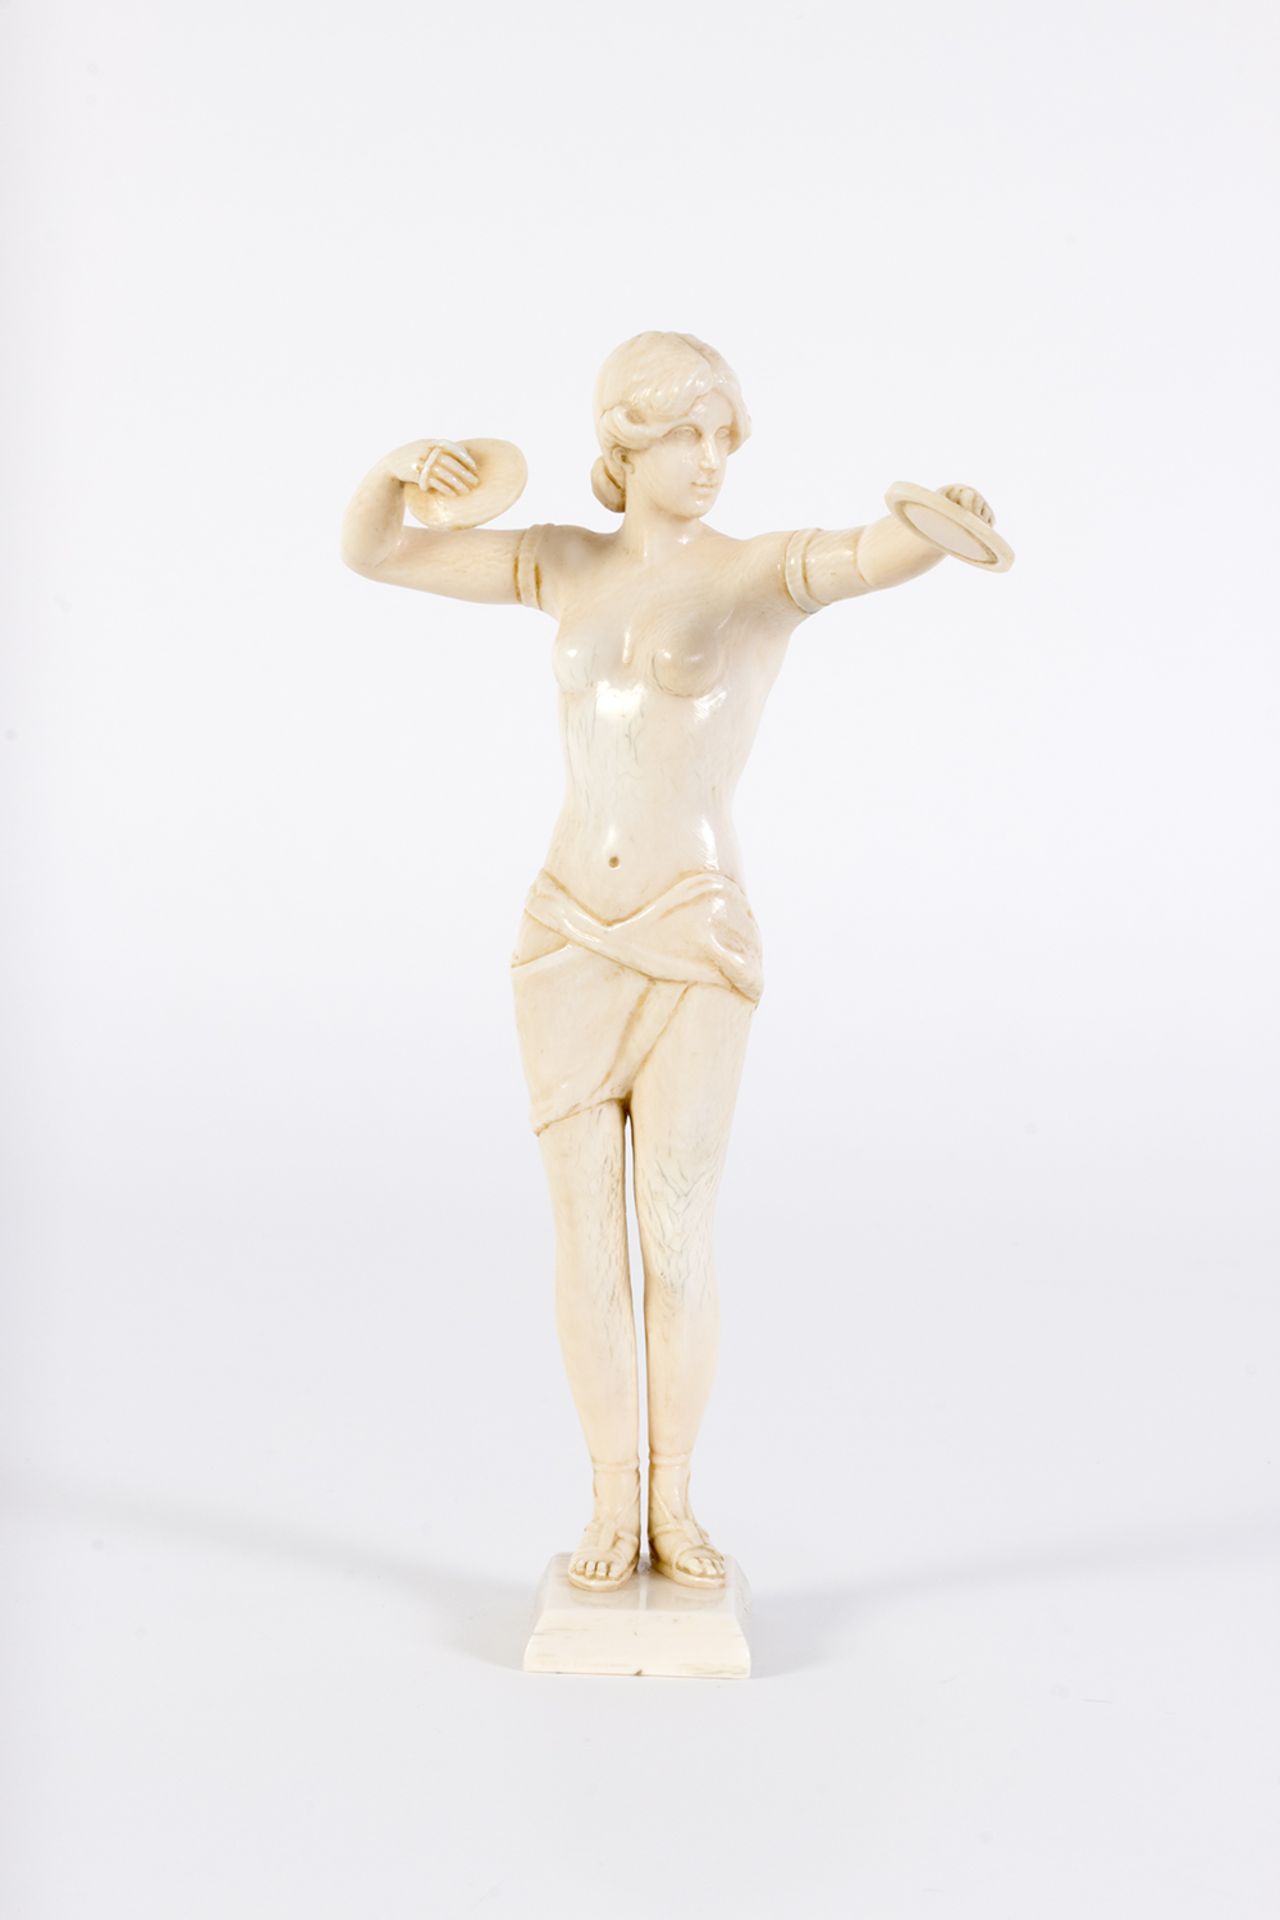 Bailarina semidesnuda con platillos. Art Nouveau. Francia, principios del s.XX.